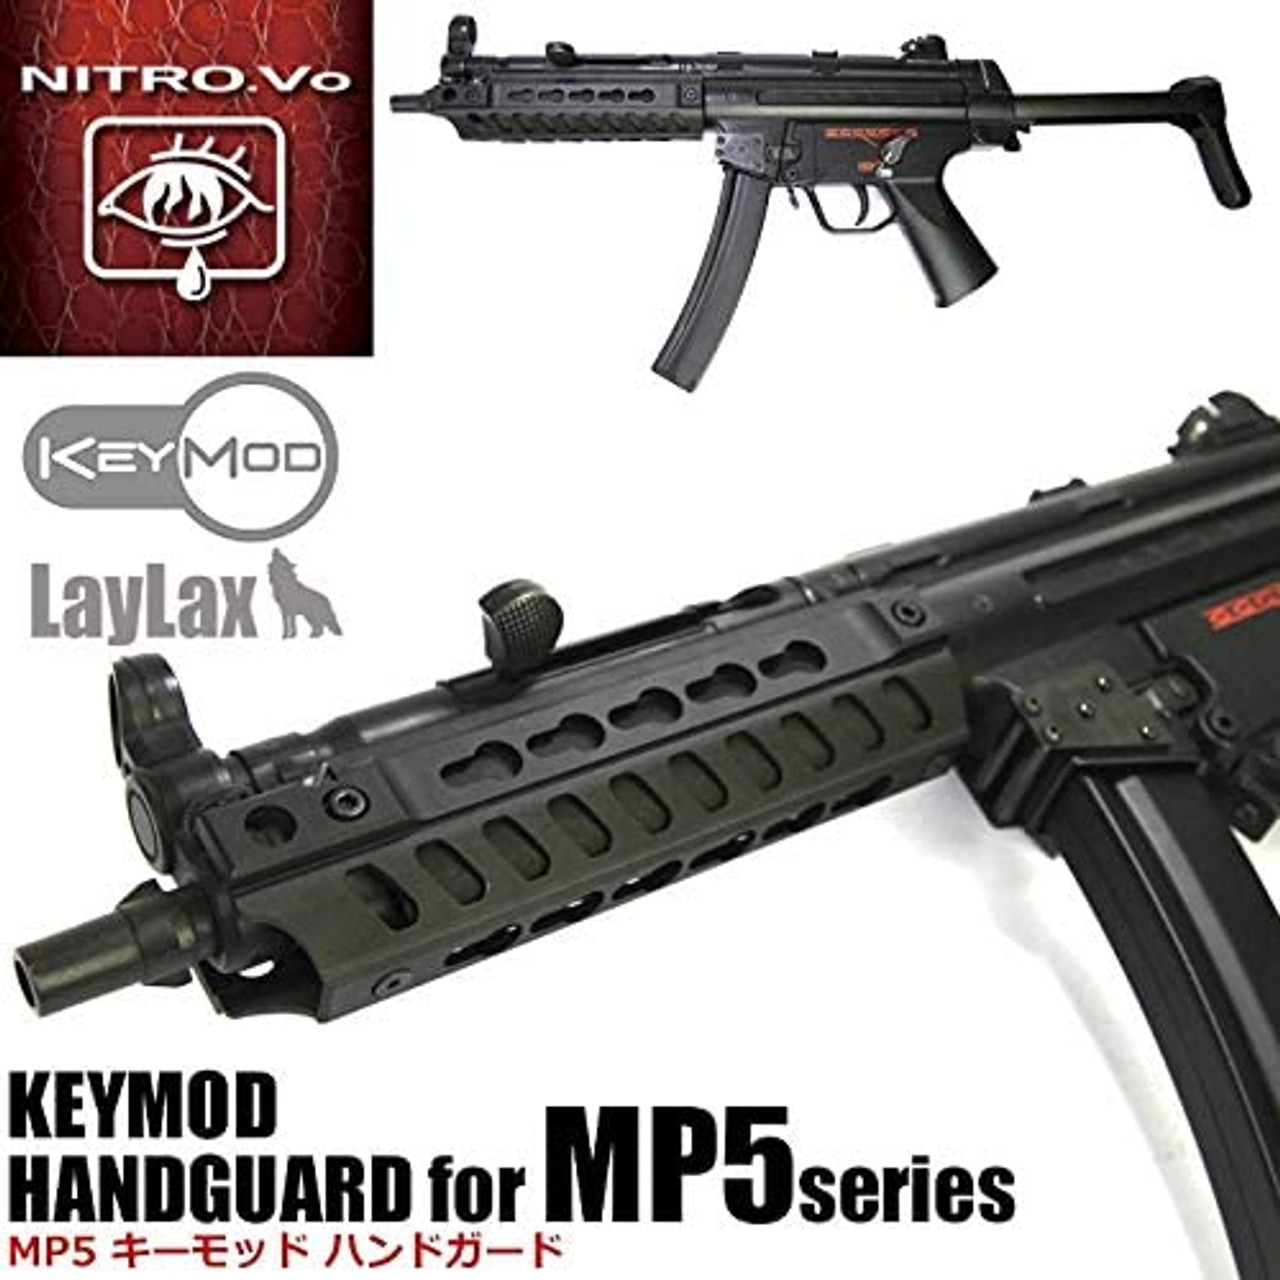 LayLax NITRO.Vo MP5 Key Mod Rail Hand Guard - Airsoft Shop Japan